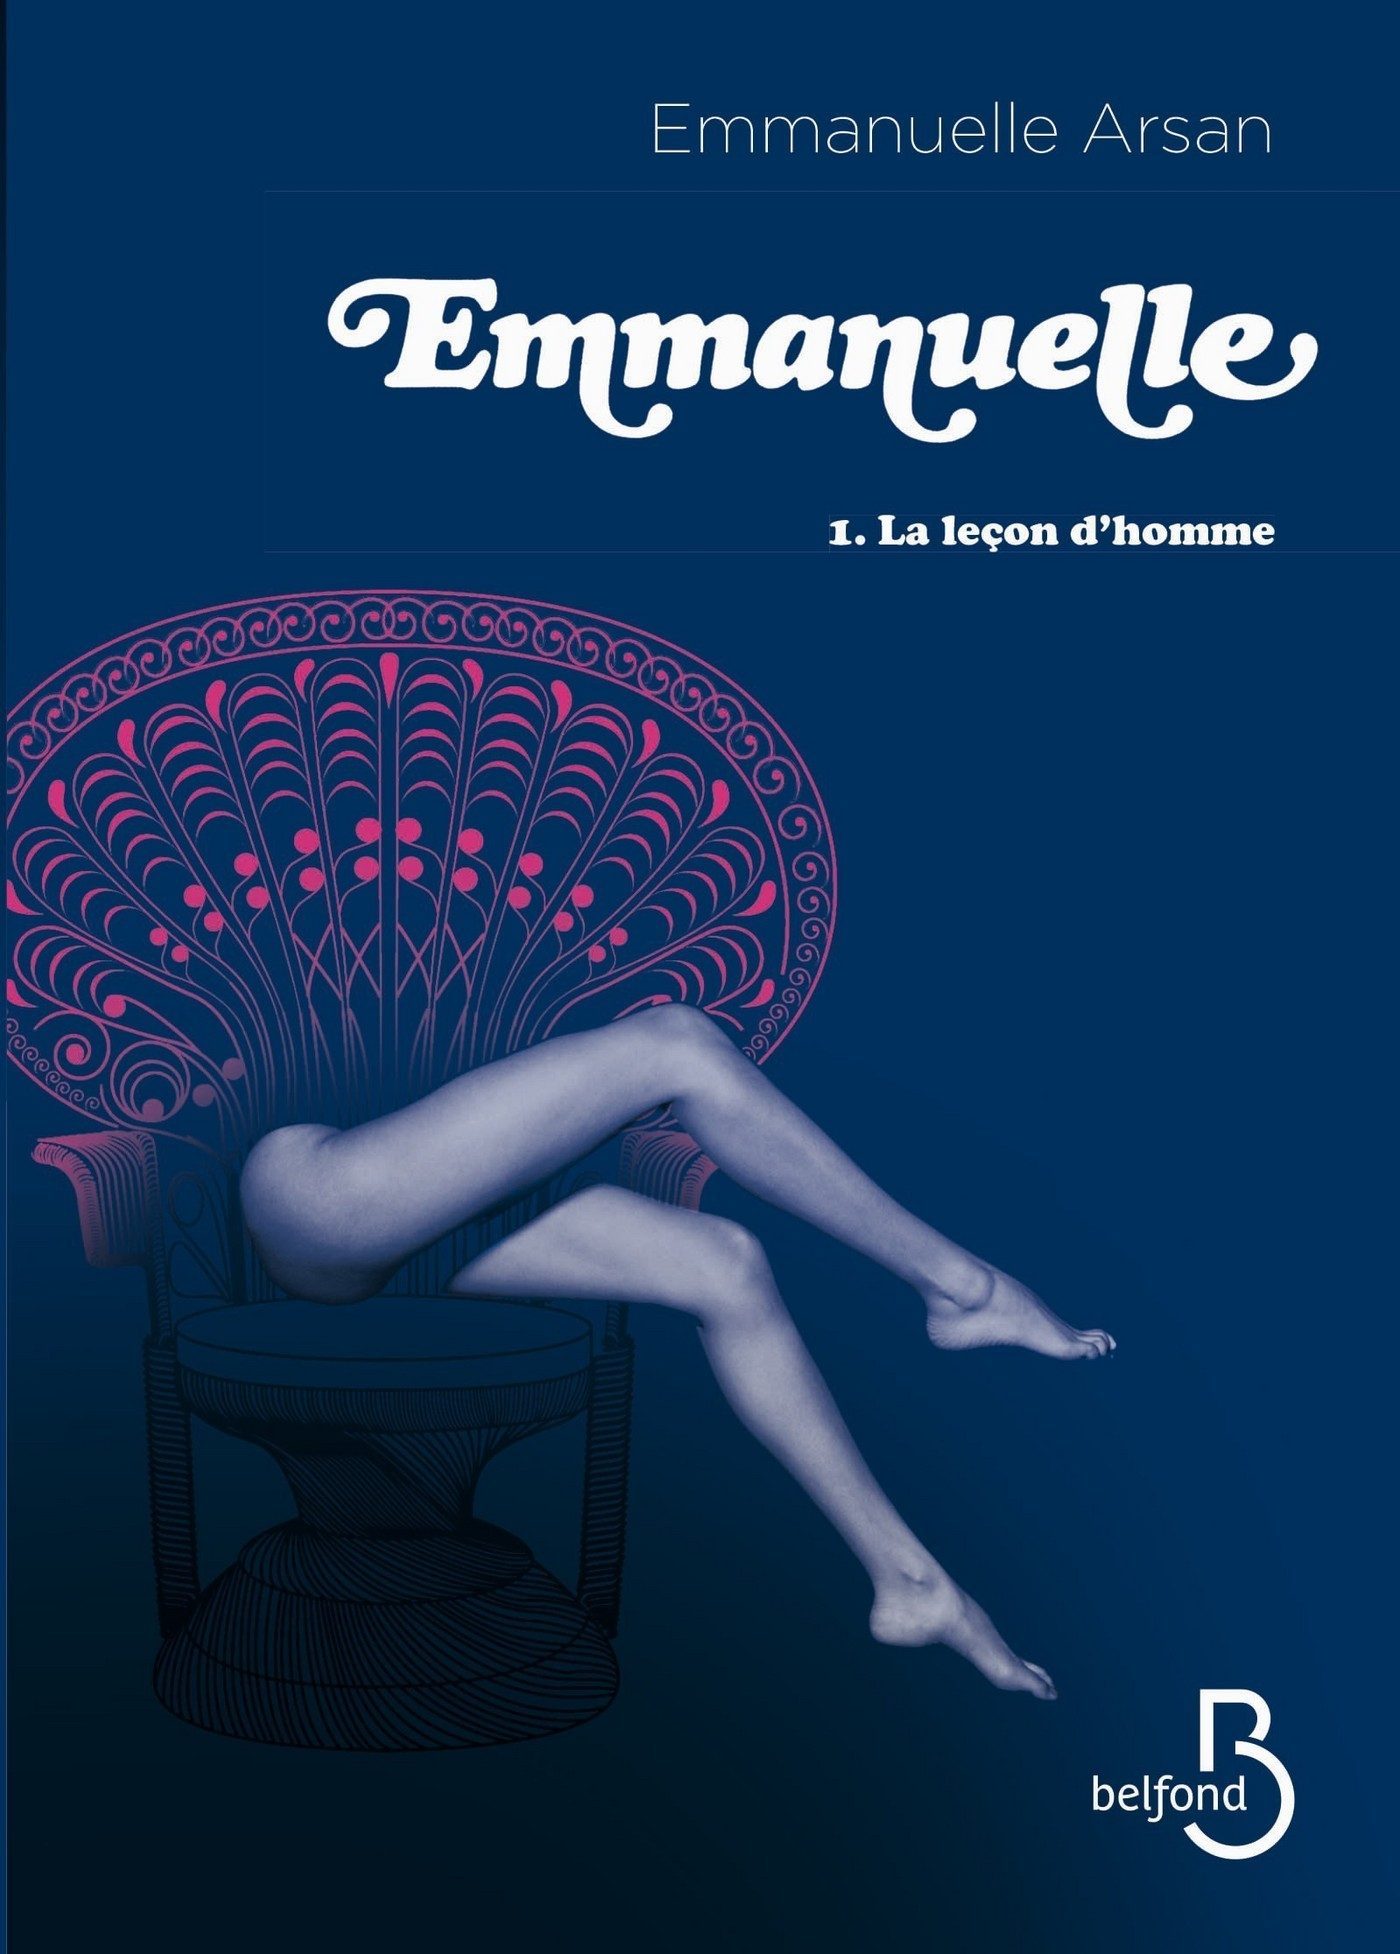 Emmanuelle pdf english